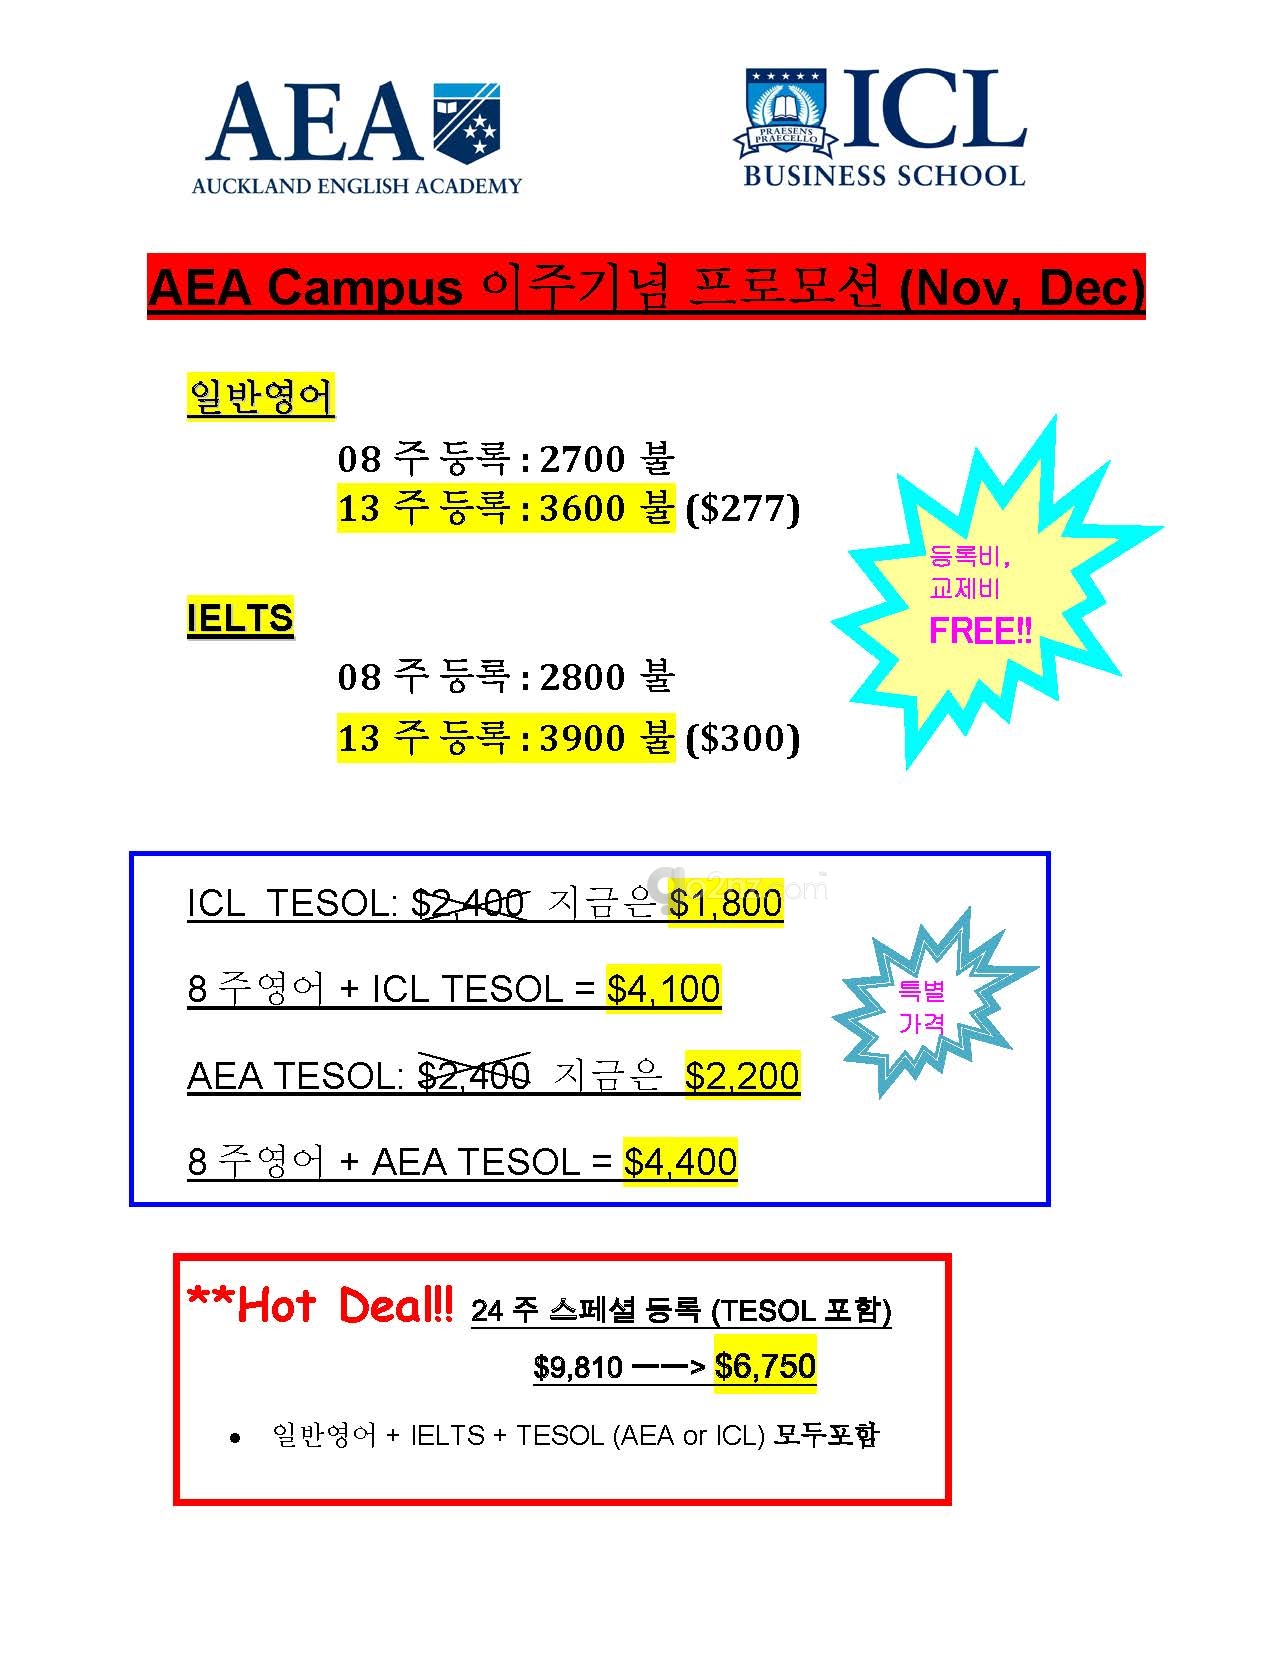 promotion Nov Dec 2012 Korean.jpg